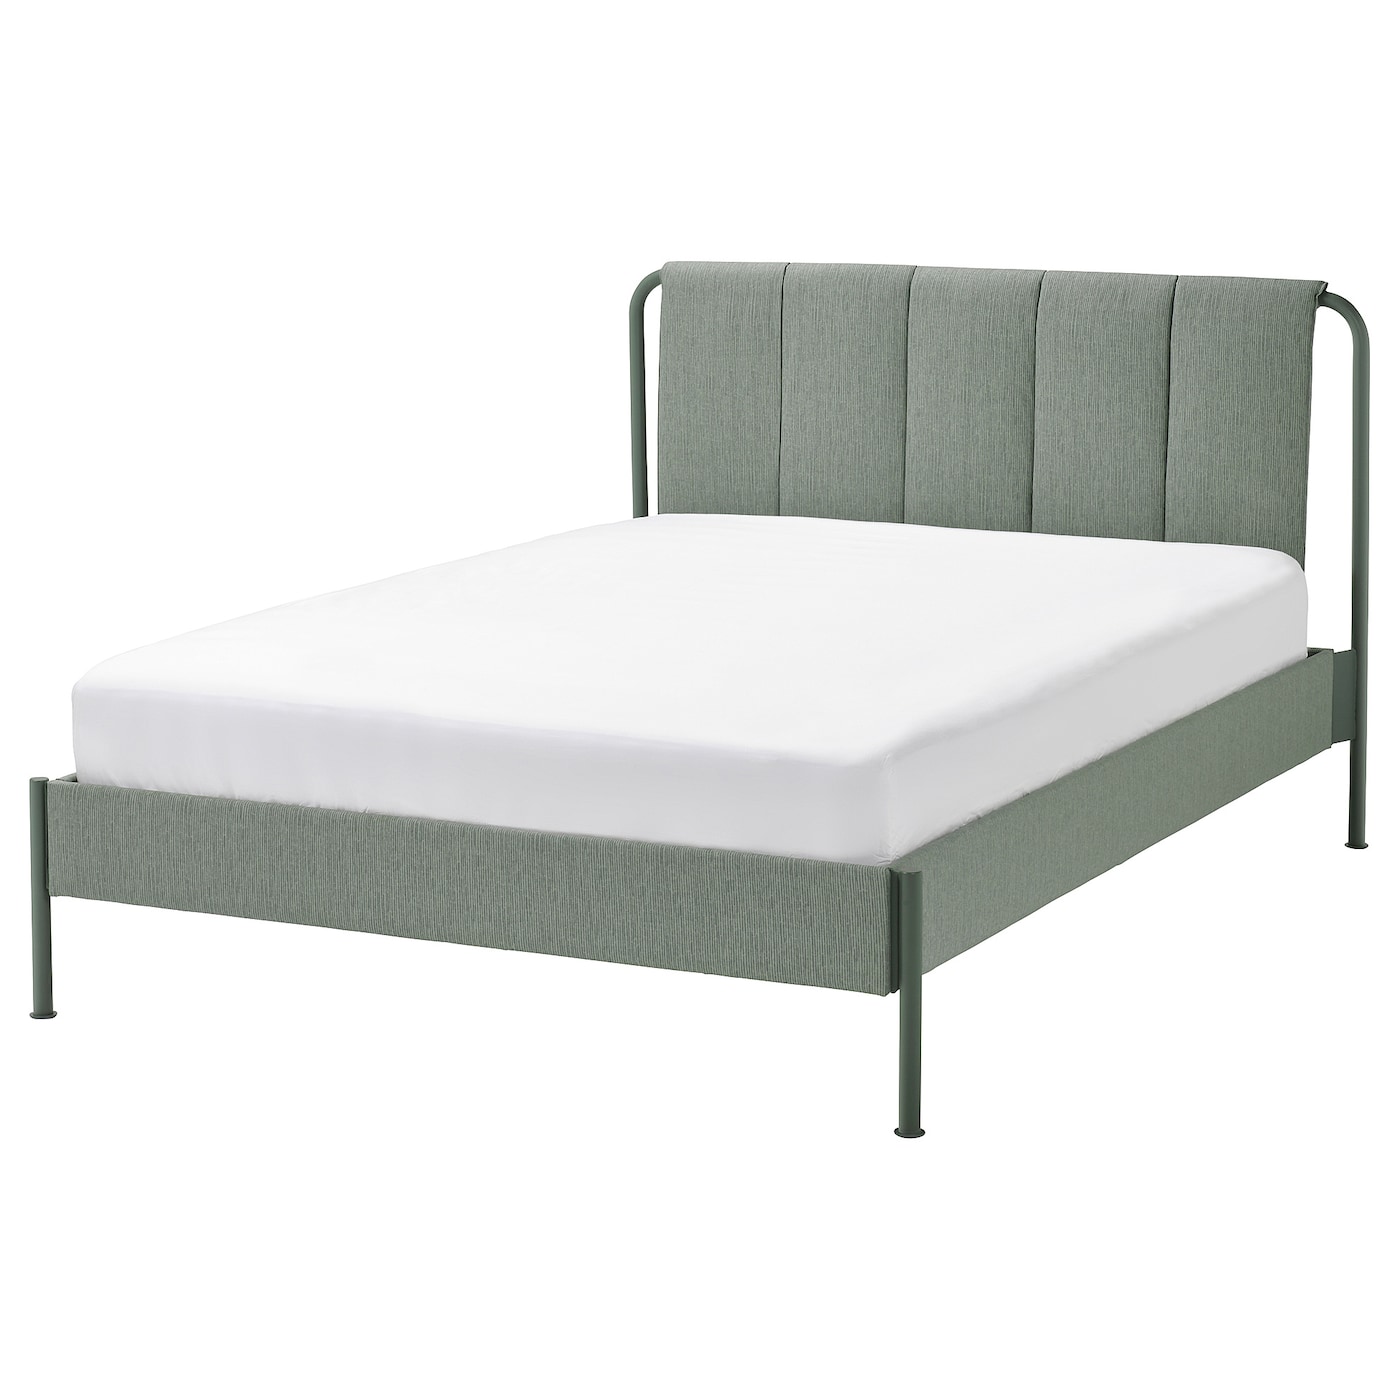 Каркас кровати с мягкой обивкой - IKEA TÄLLÅSEN/TALLASEN, 200х140 см, светло-зеленый, ТЭЛЛАСОН ИКЕА